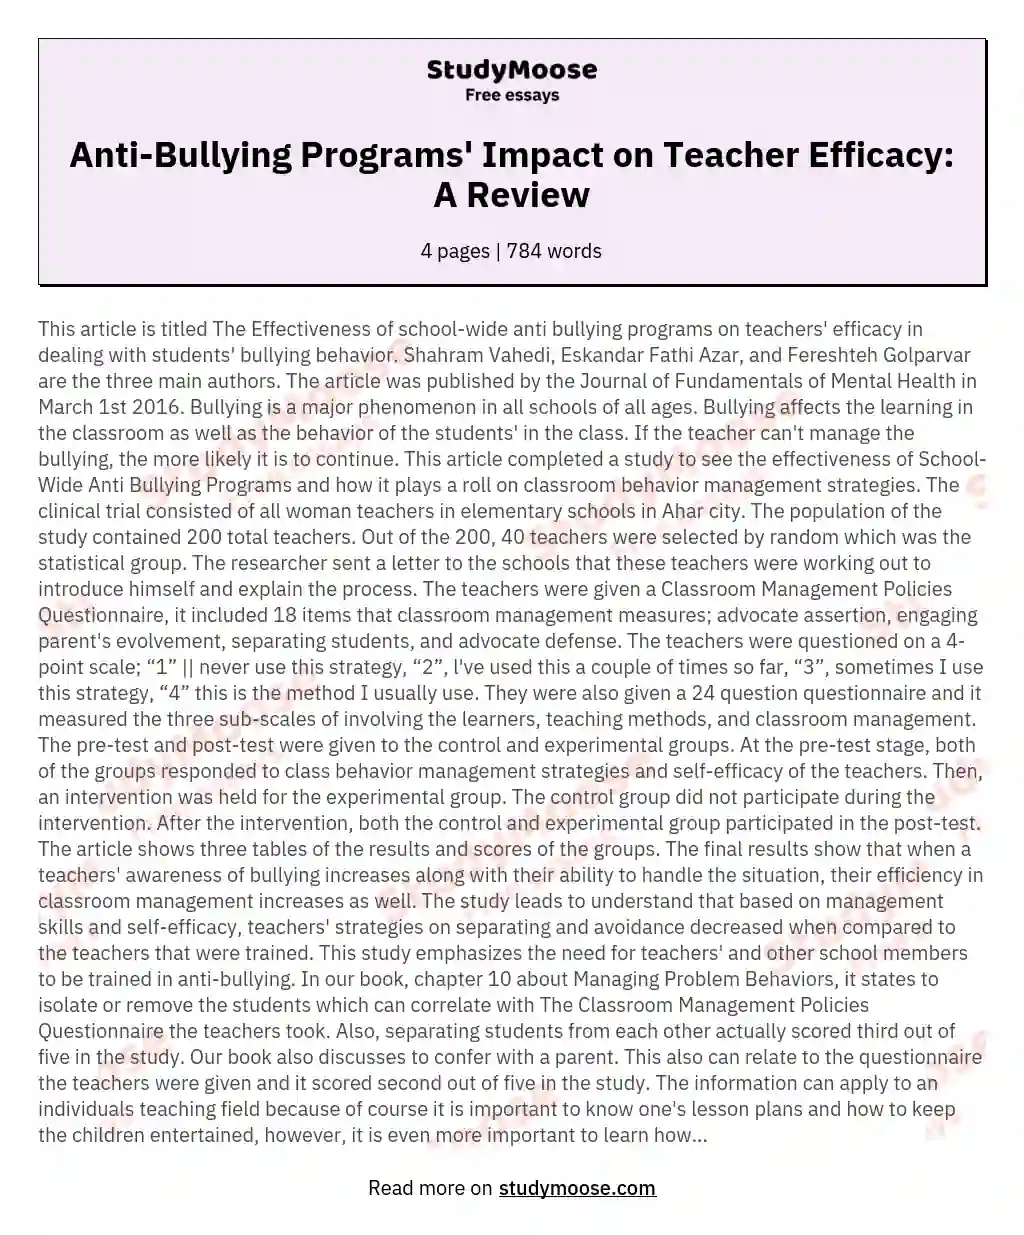 Anti-Bullying Programs' Impact on Teacher Efficacy: A Review essay